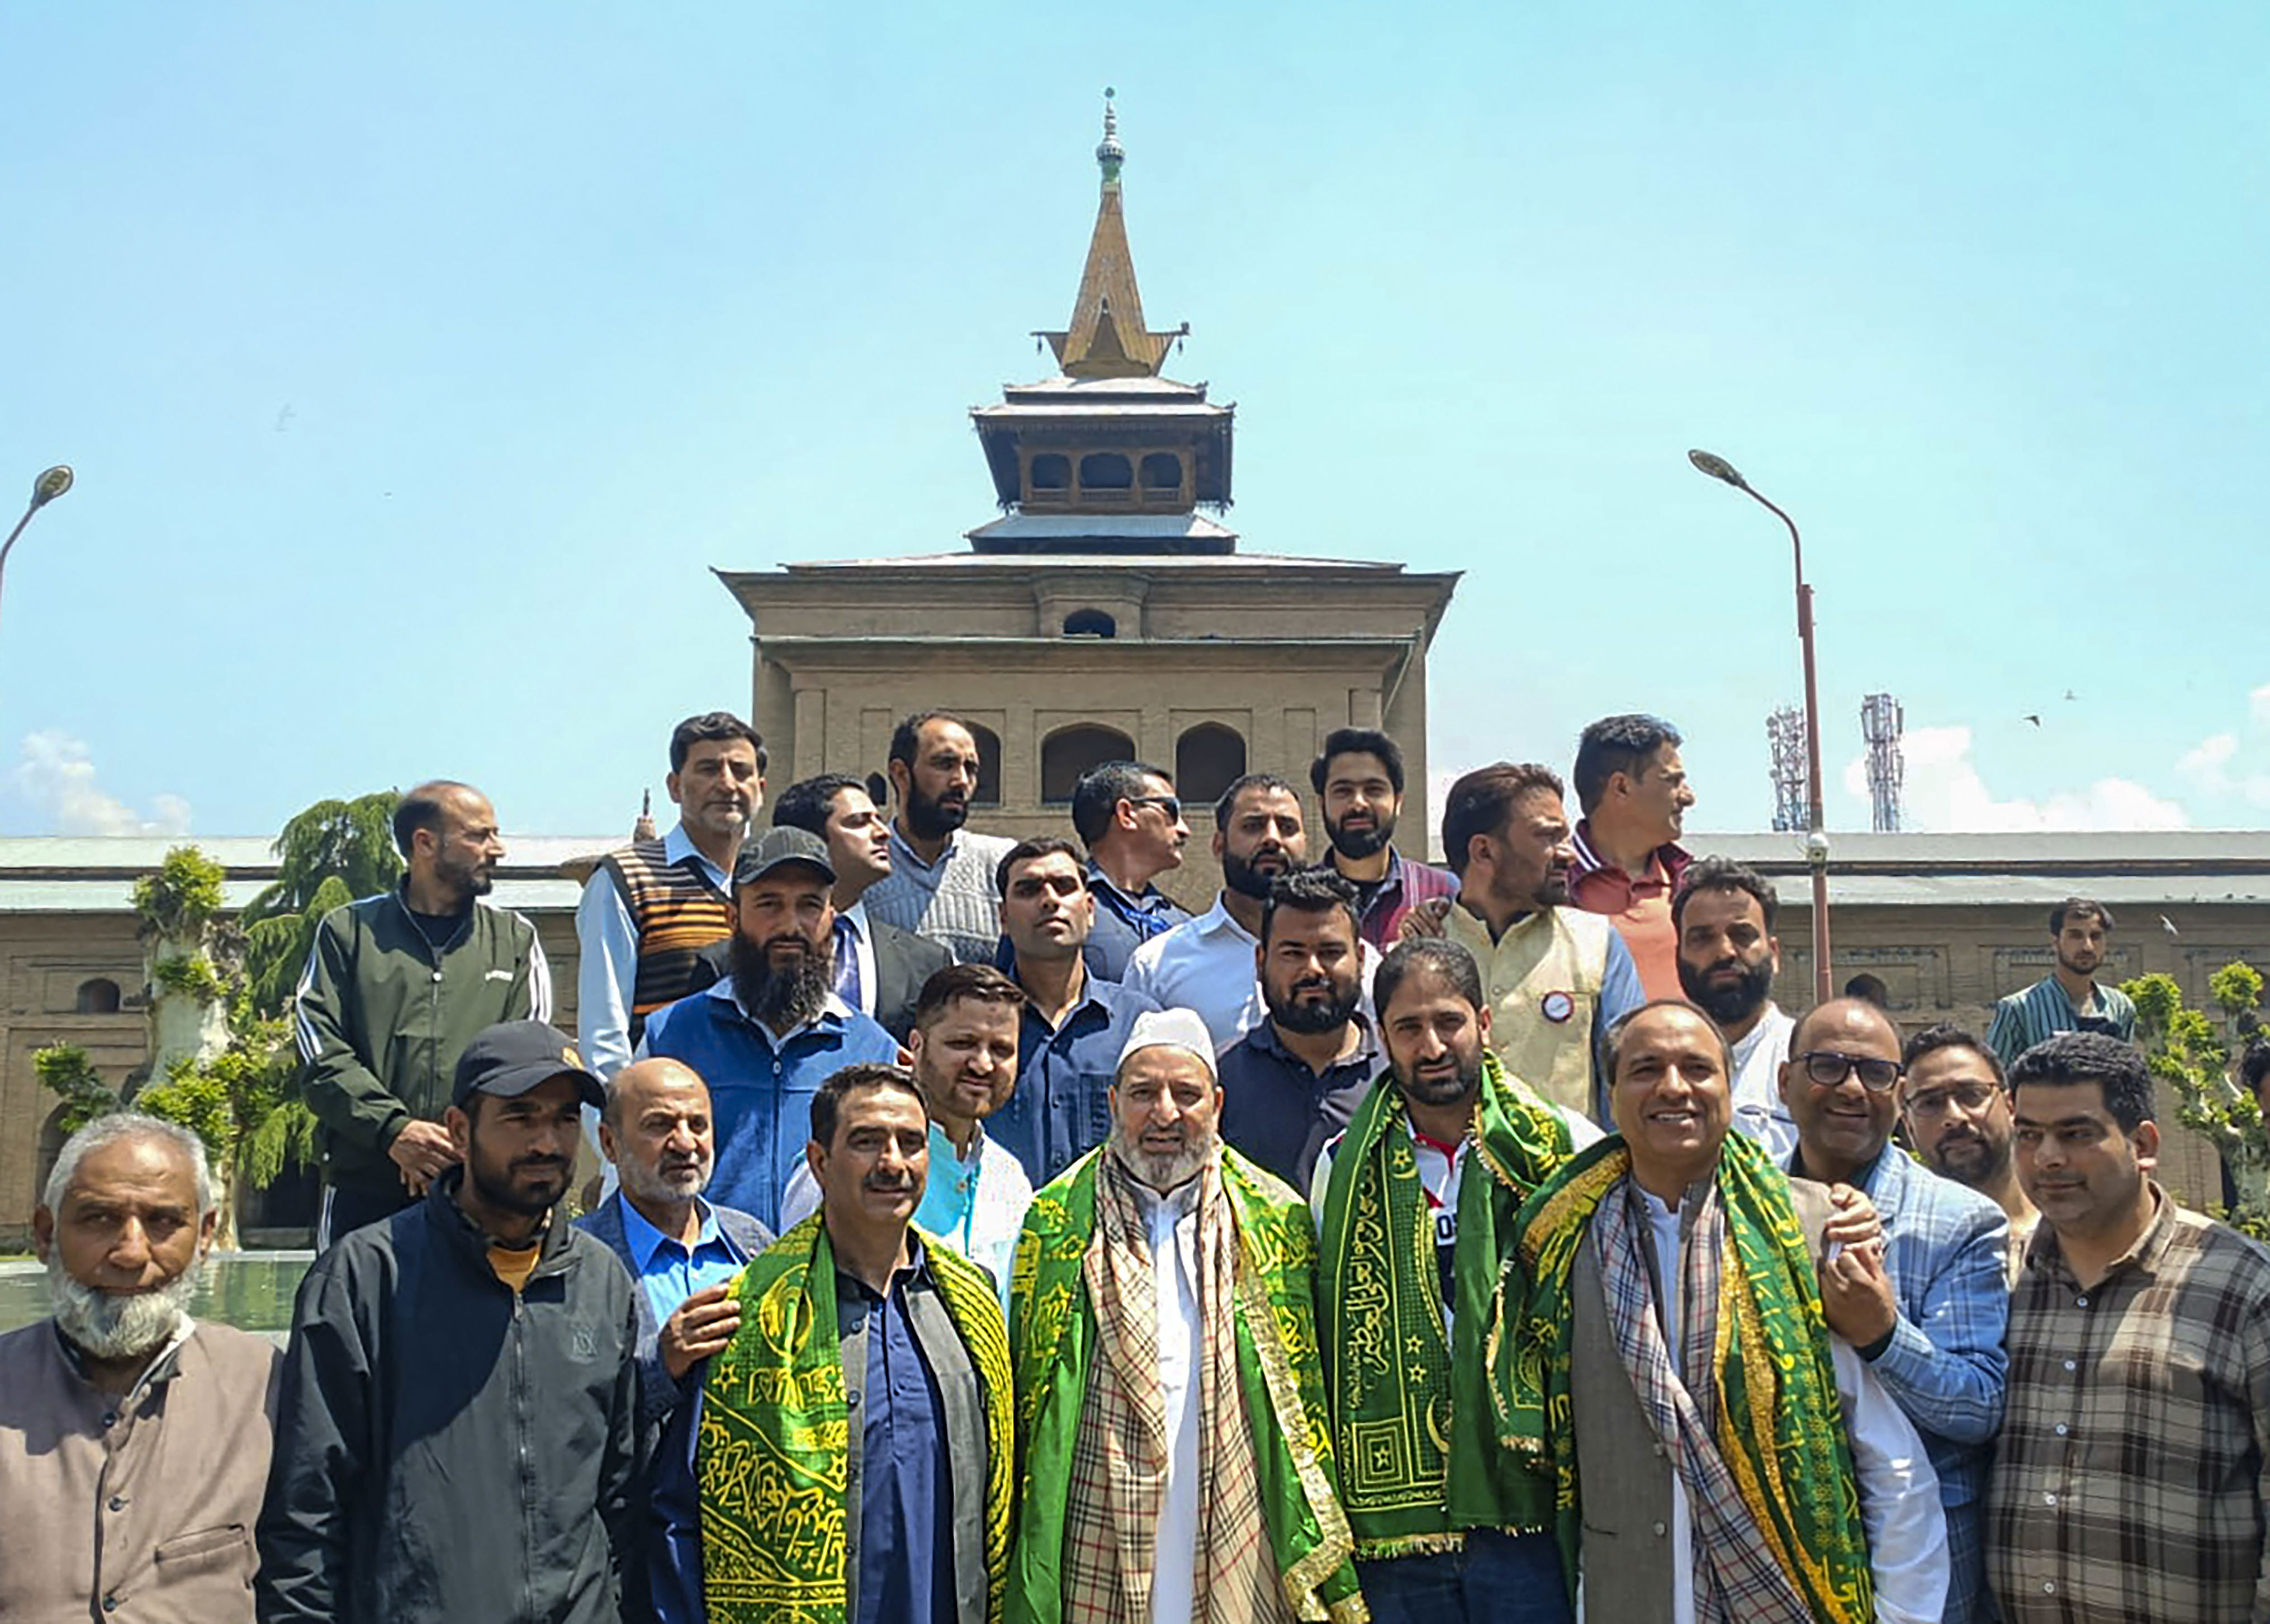 altaf bukhari offers prayers inside srinagar's jamia masjid, says 'credit for peace goes to people'